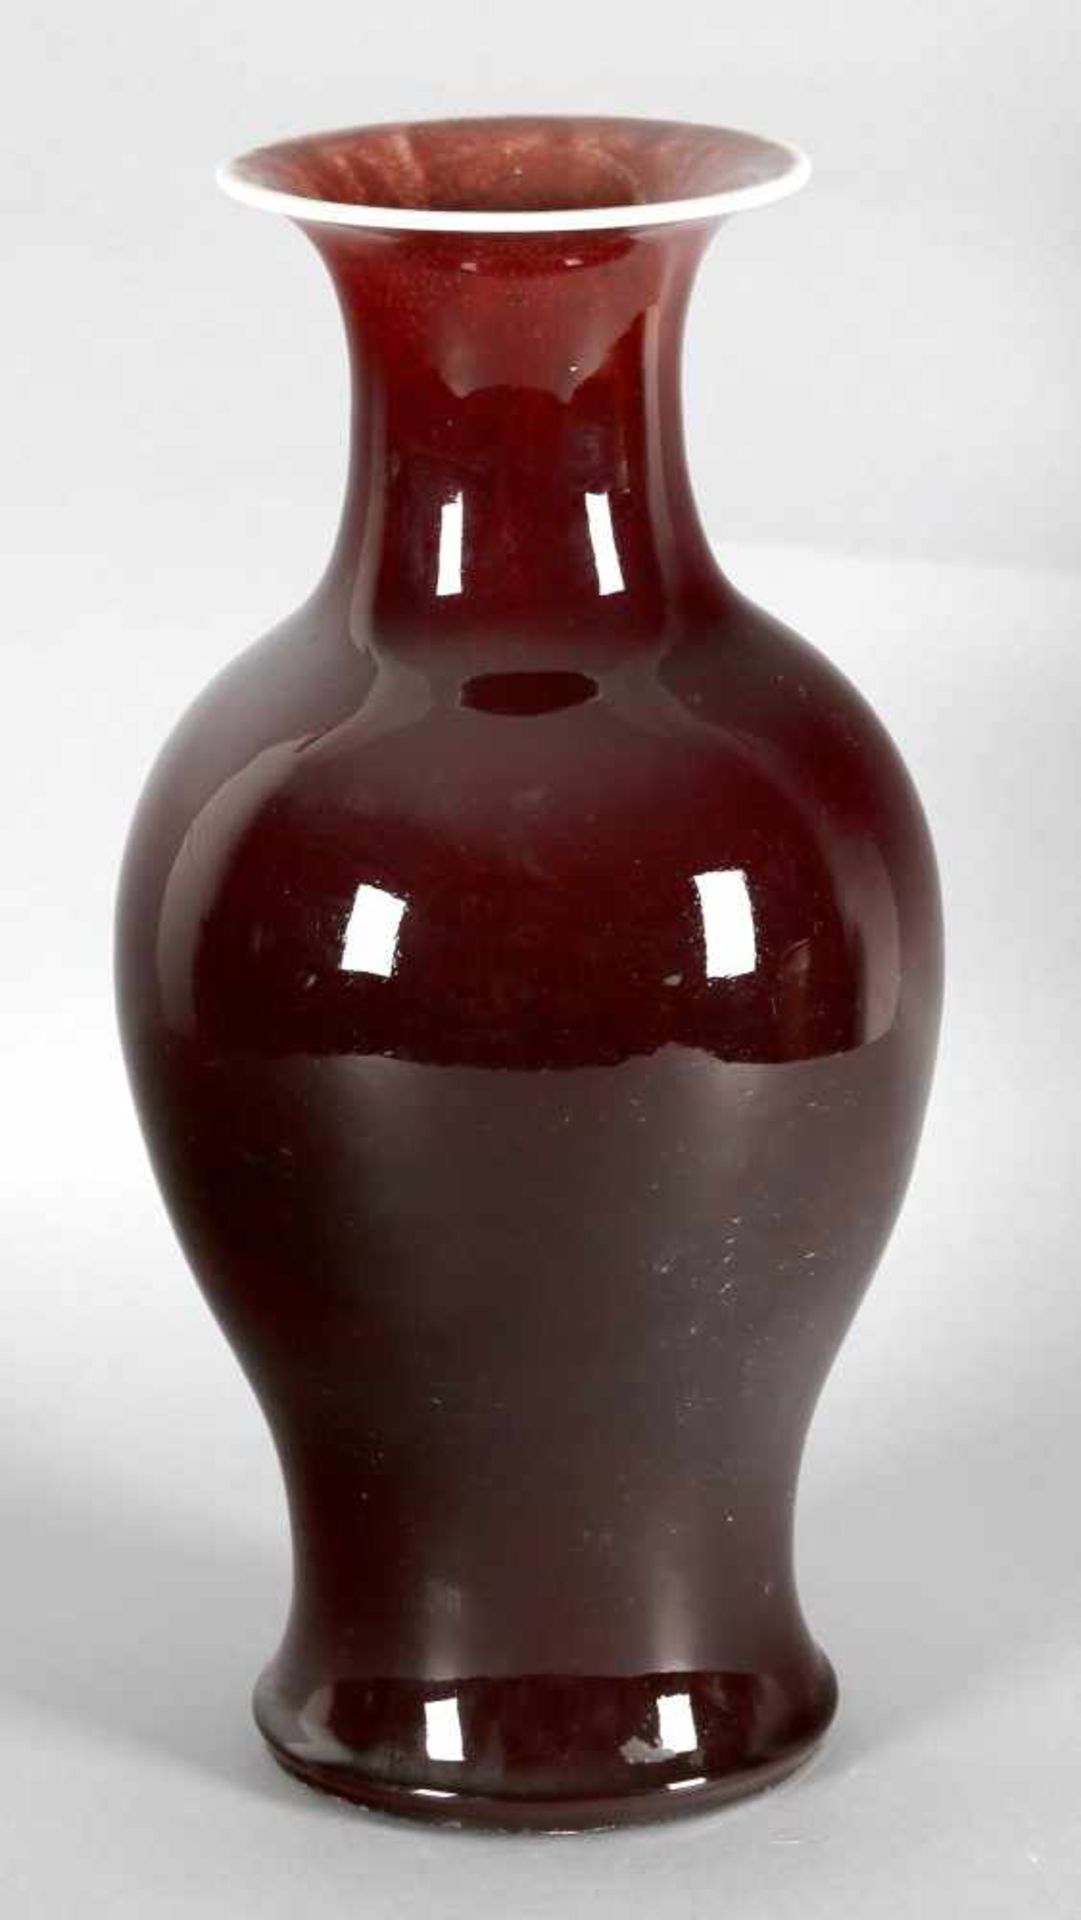 Chinesische Vase, Porzellan mit Sang de boeuf Glasur (ochsenblutrot), wohl 19./20. Jh.hohe